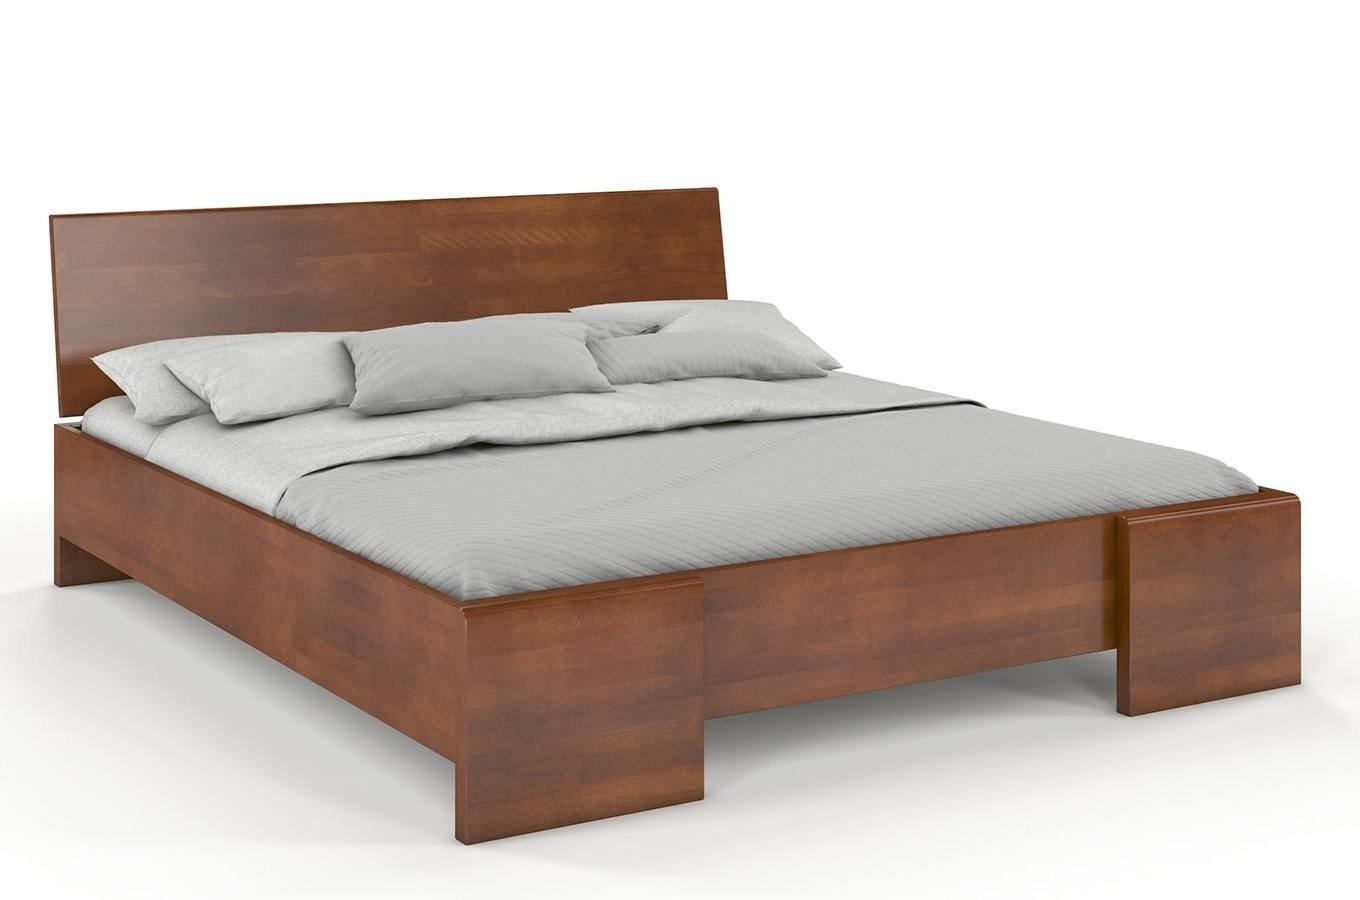 Łóżko drewniane bukowe Visby HESSLER High & LONG (długość + 20 cm) / 120x220 cm, kolor orzech